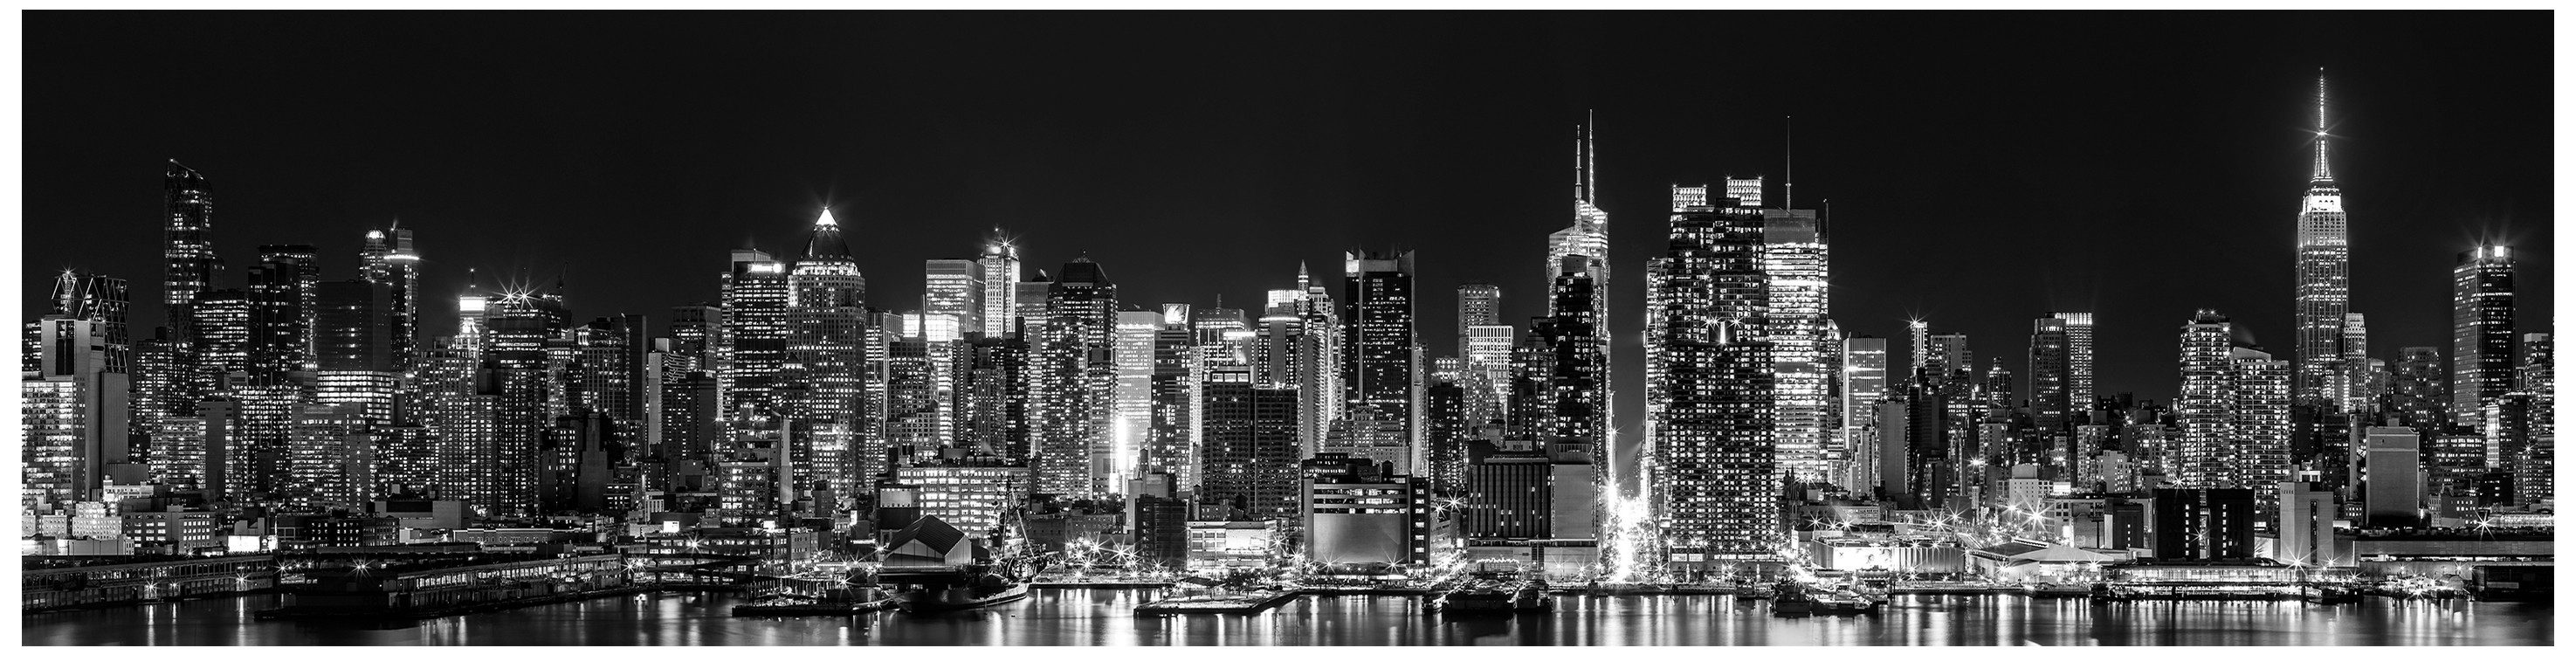 wandmotiv24 Fototapete New York bei Nacht, Schwarz-Weiß, glatt, Wandtapete, Motivtapete, matt, Vliestapete, selbstklebend